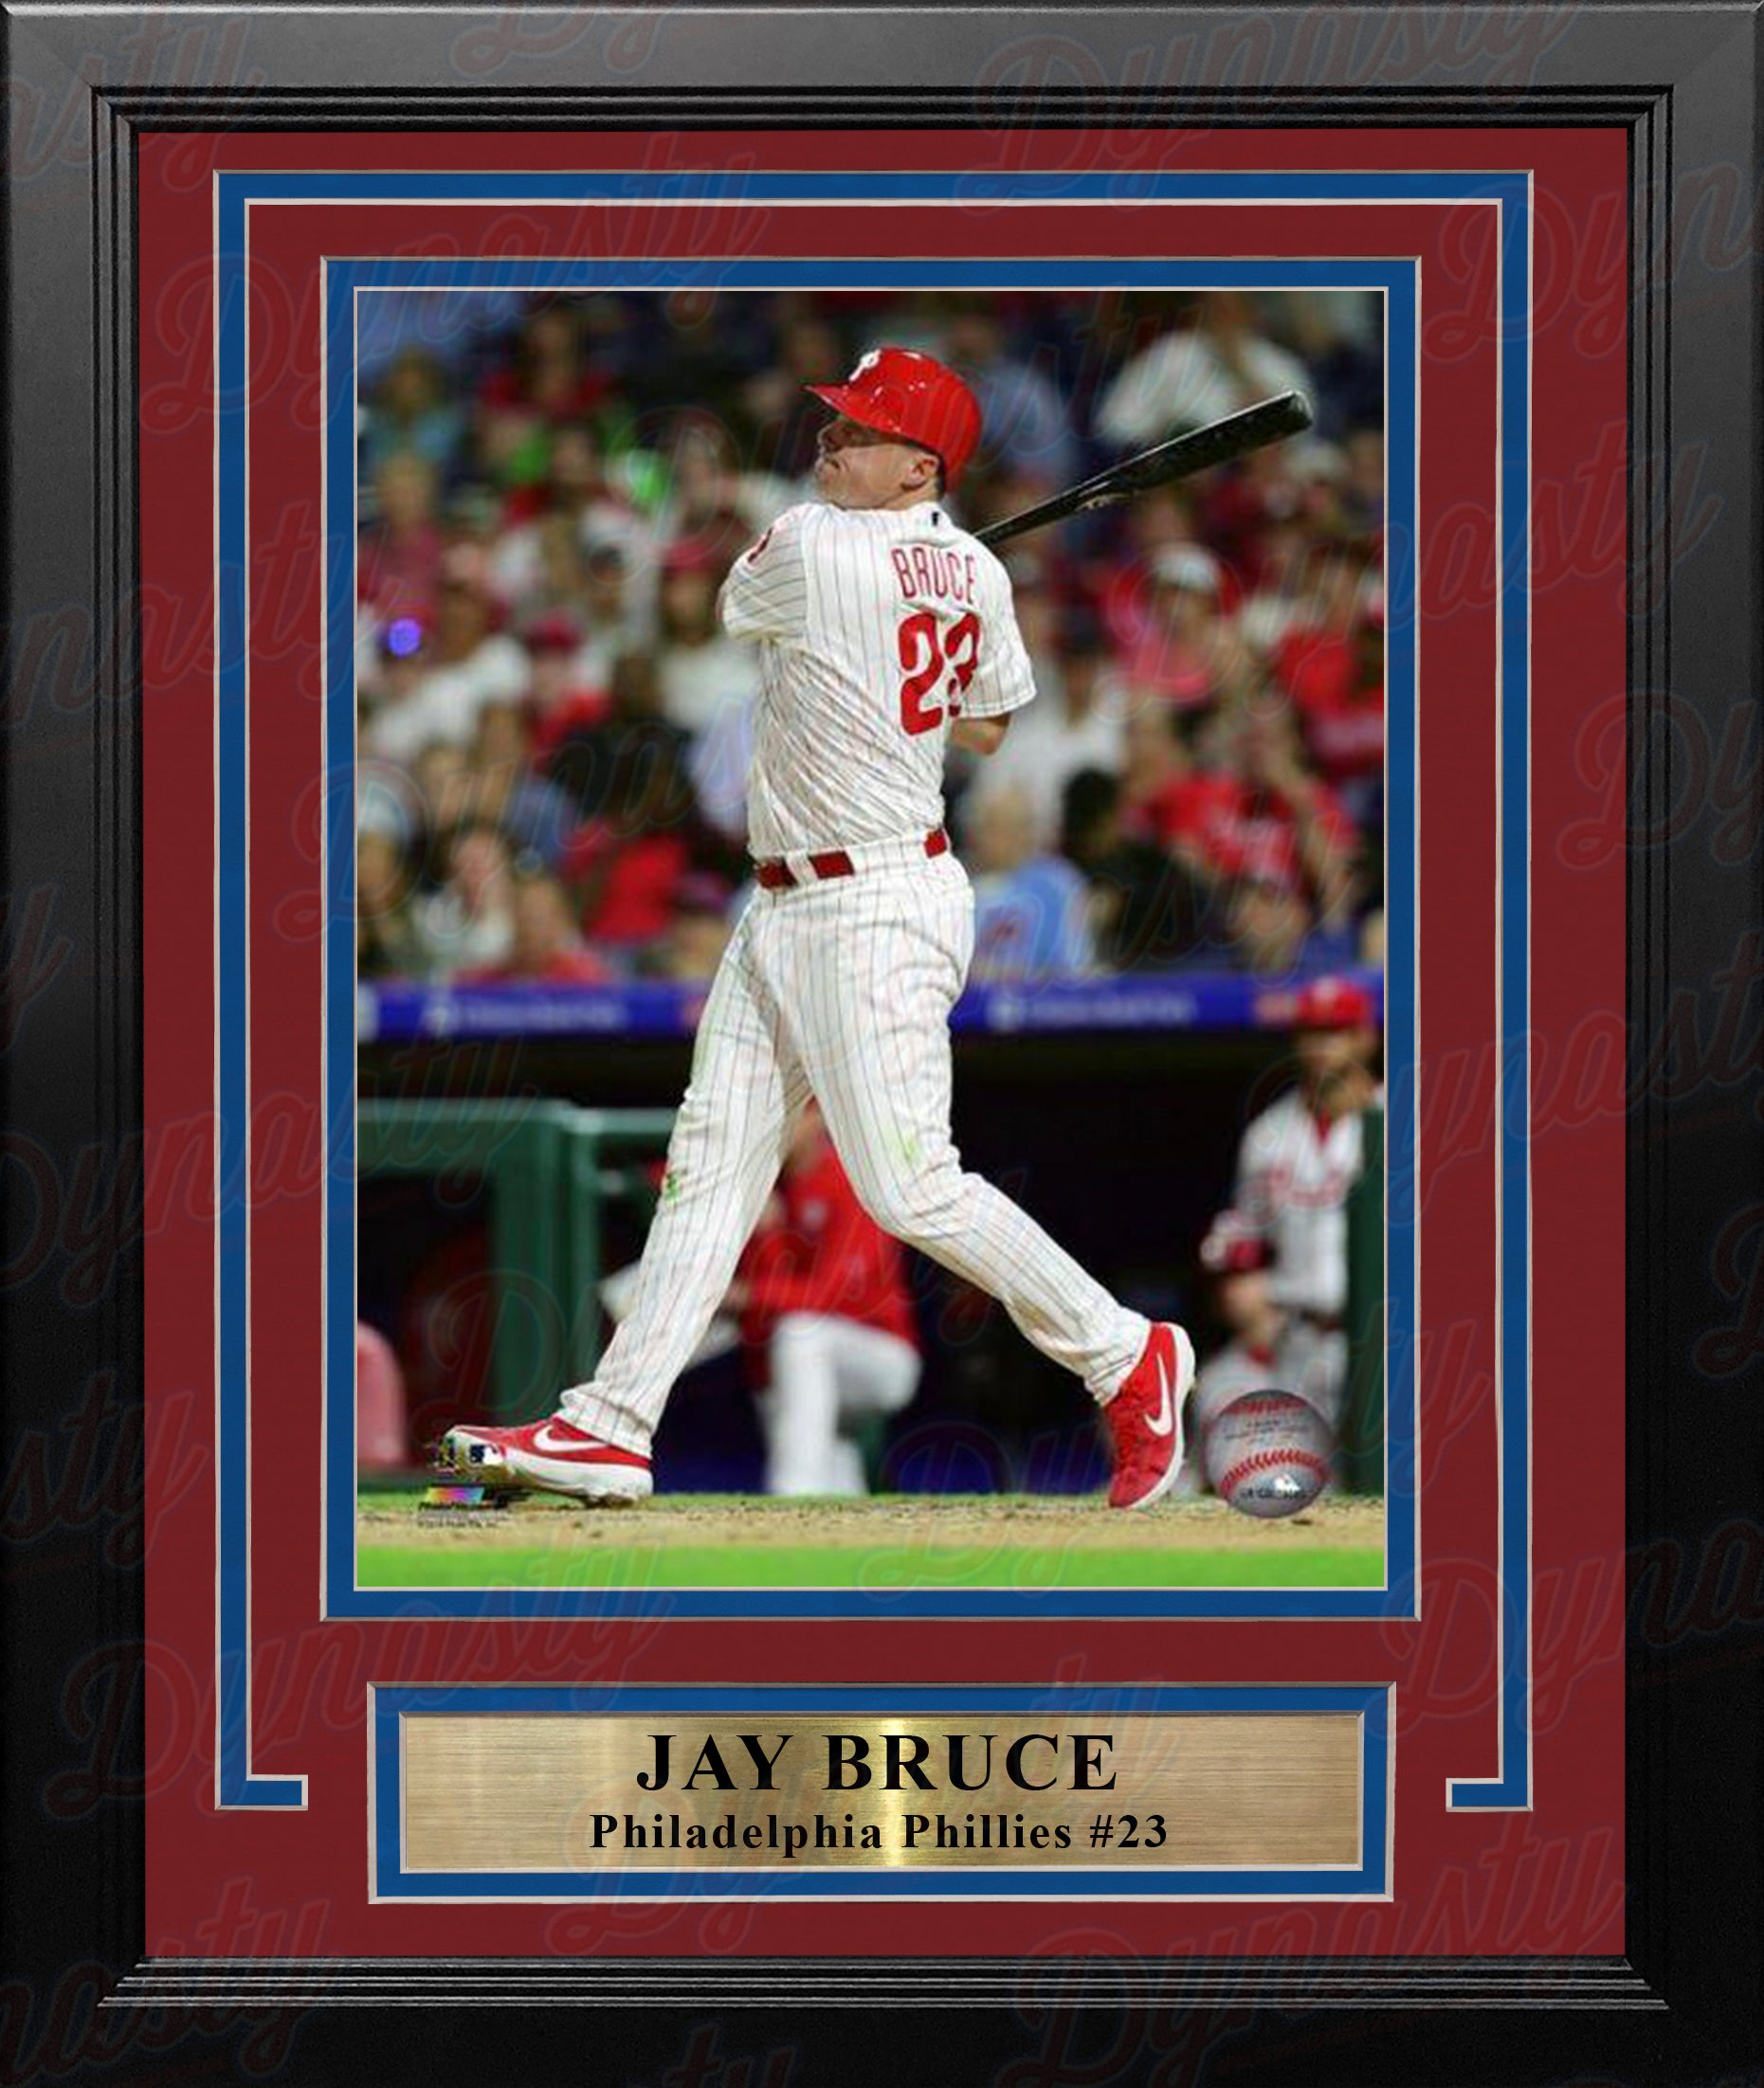 Jay Bruce Philadelphia Phillies MLB Baseball 8" x 10" Framed and Matted Photo - Dynasty Sports & Framing 